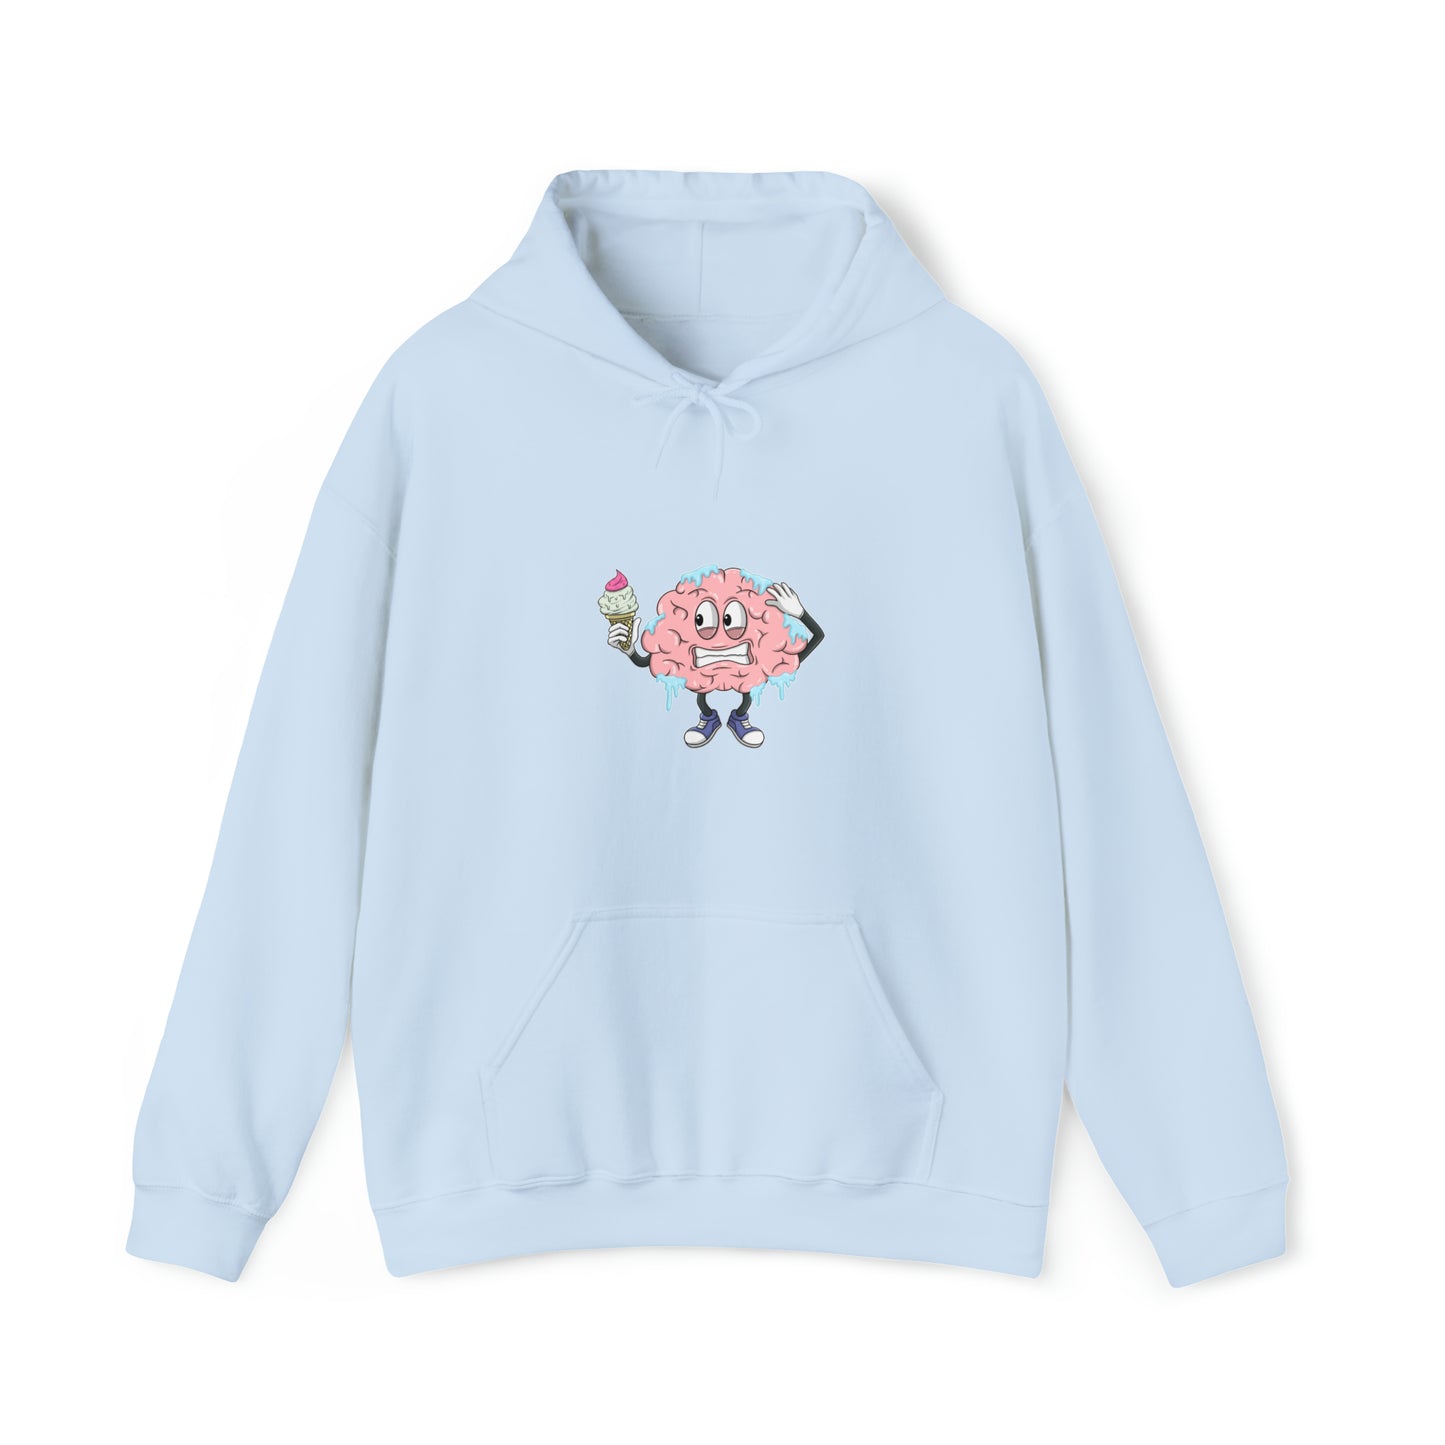 Custom Parody Hooded Sweatshirt, Brain freeze design